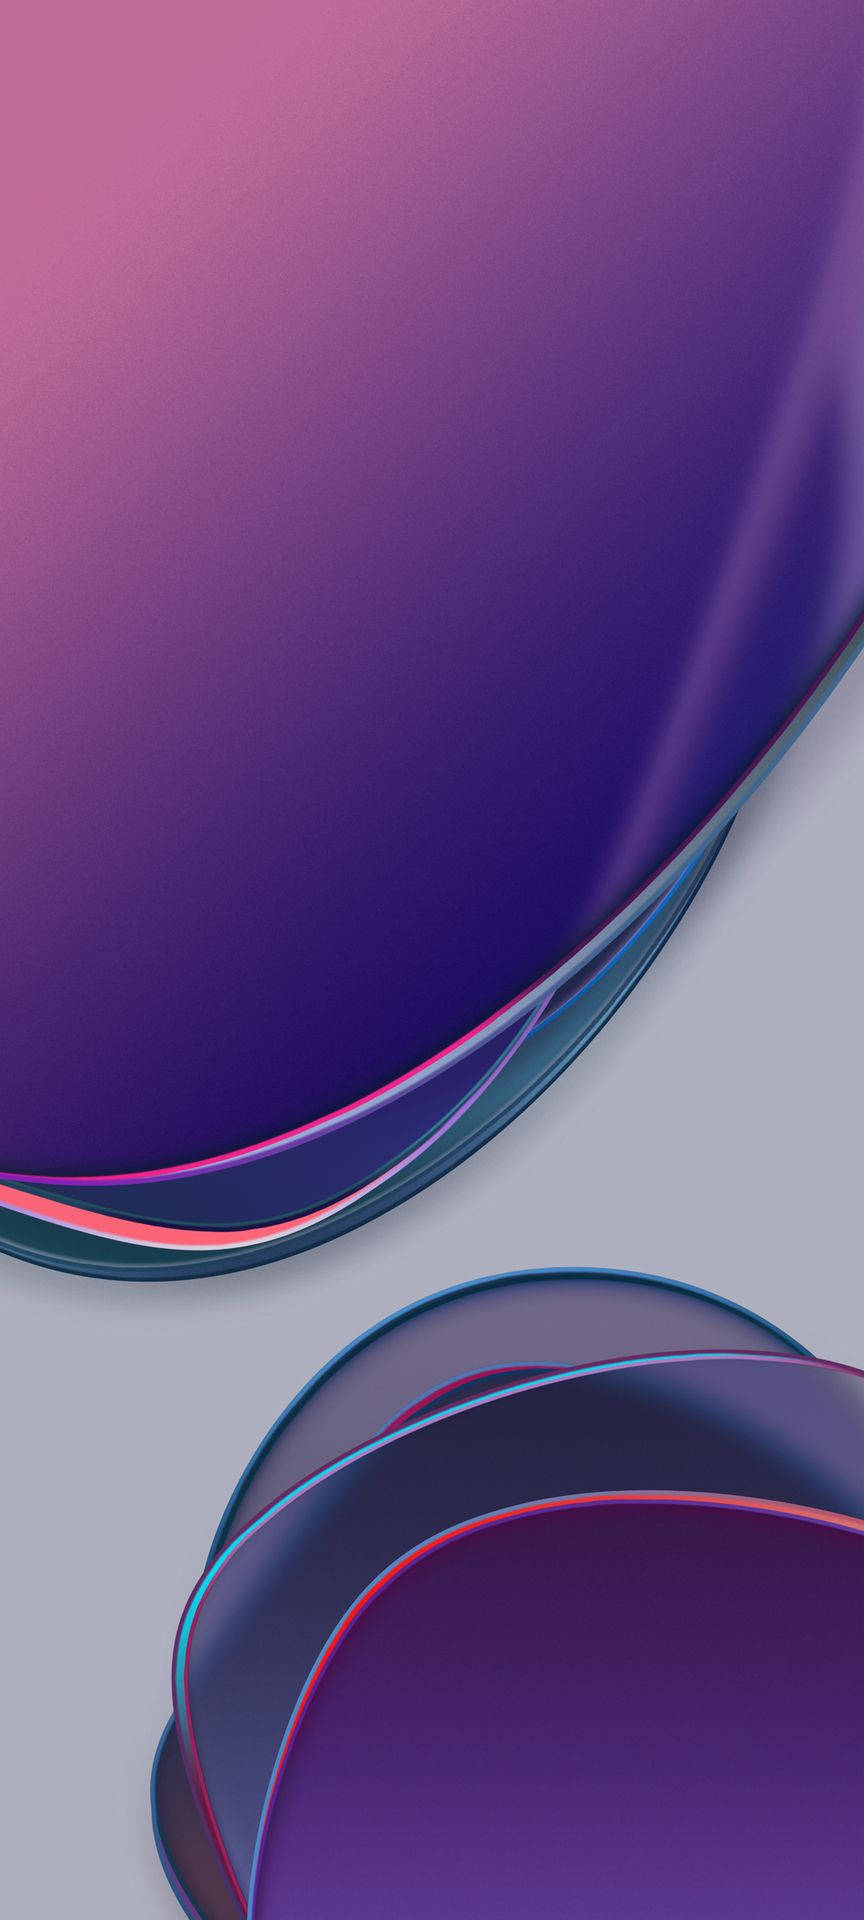 Abstrakt lilla discs OnePlus 9R Live Wallpaper Wallpaper